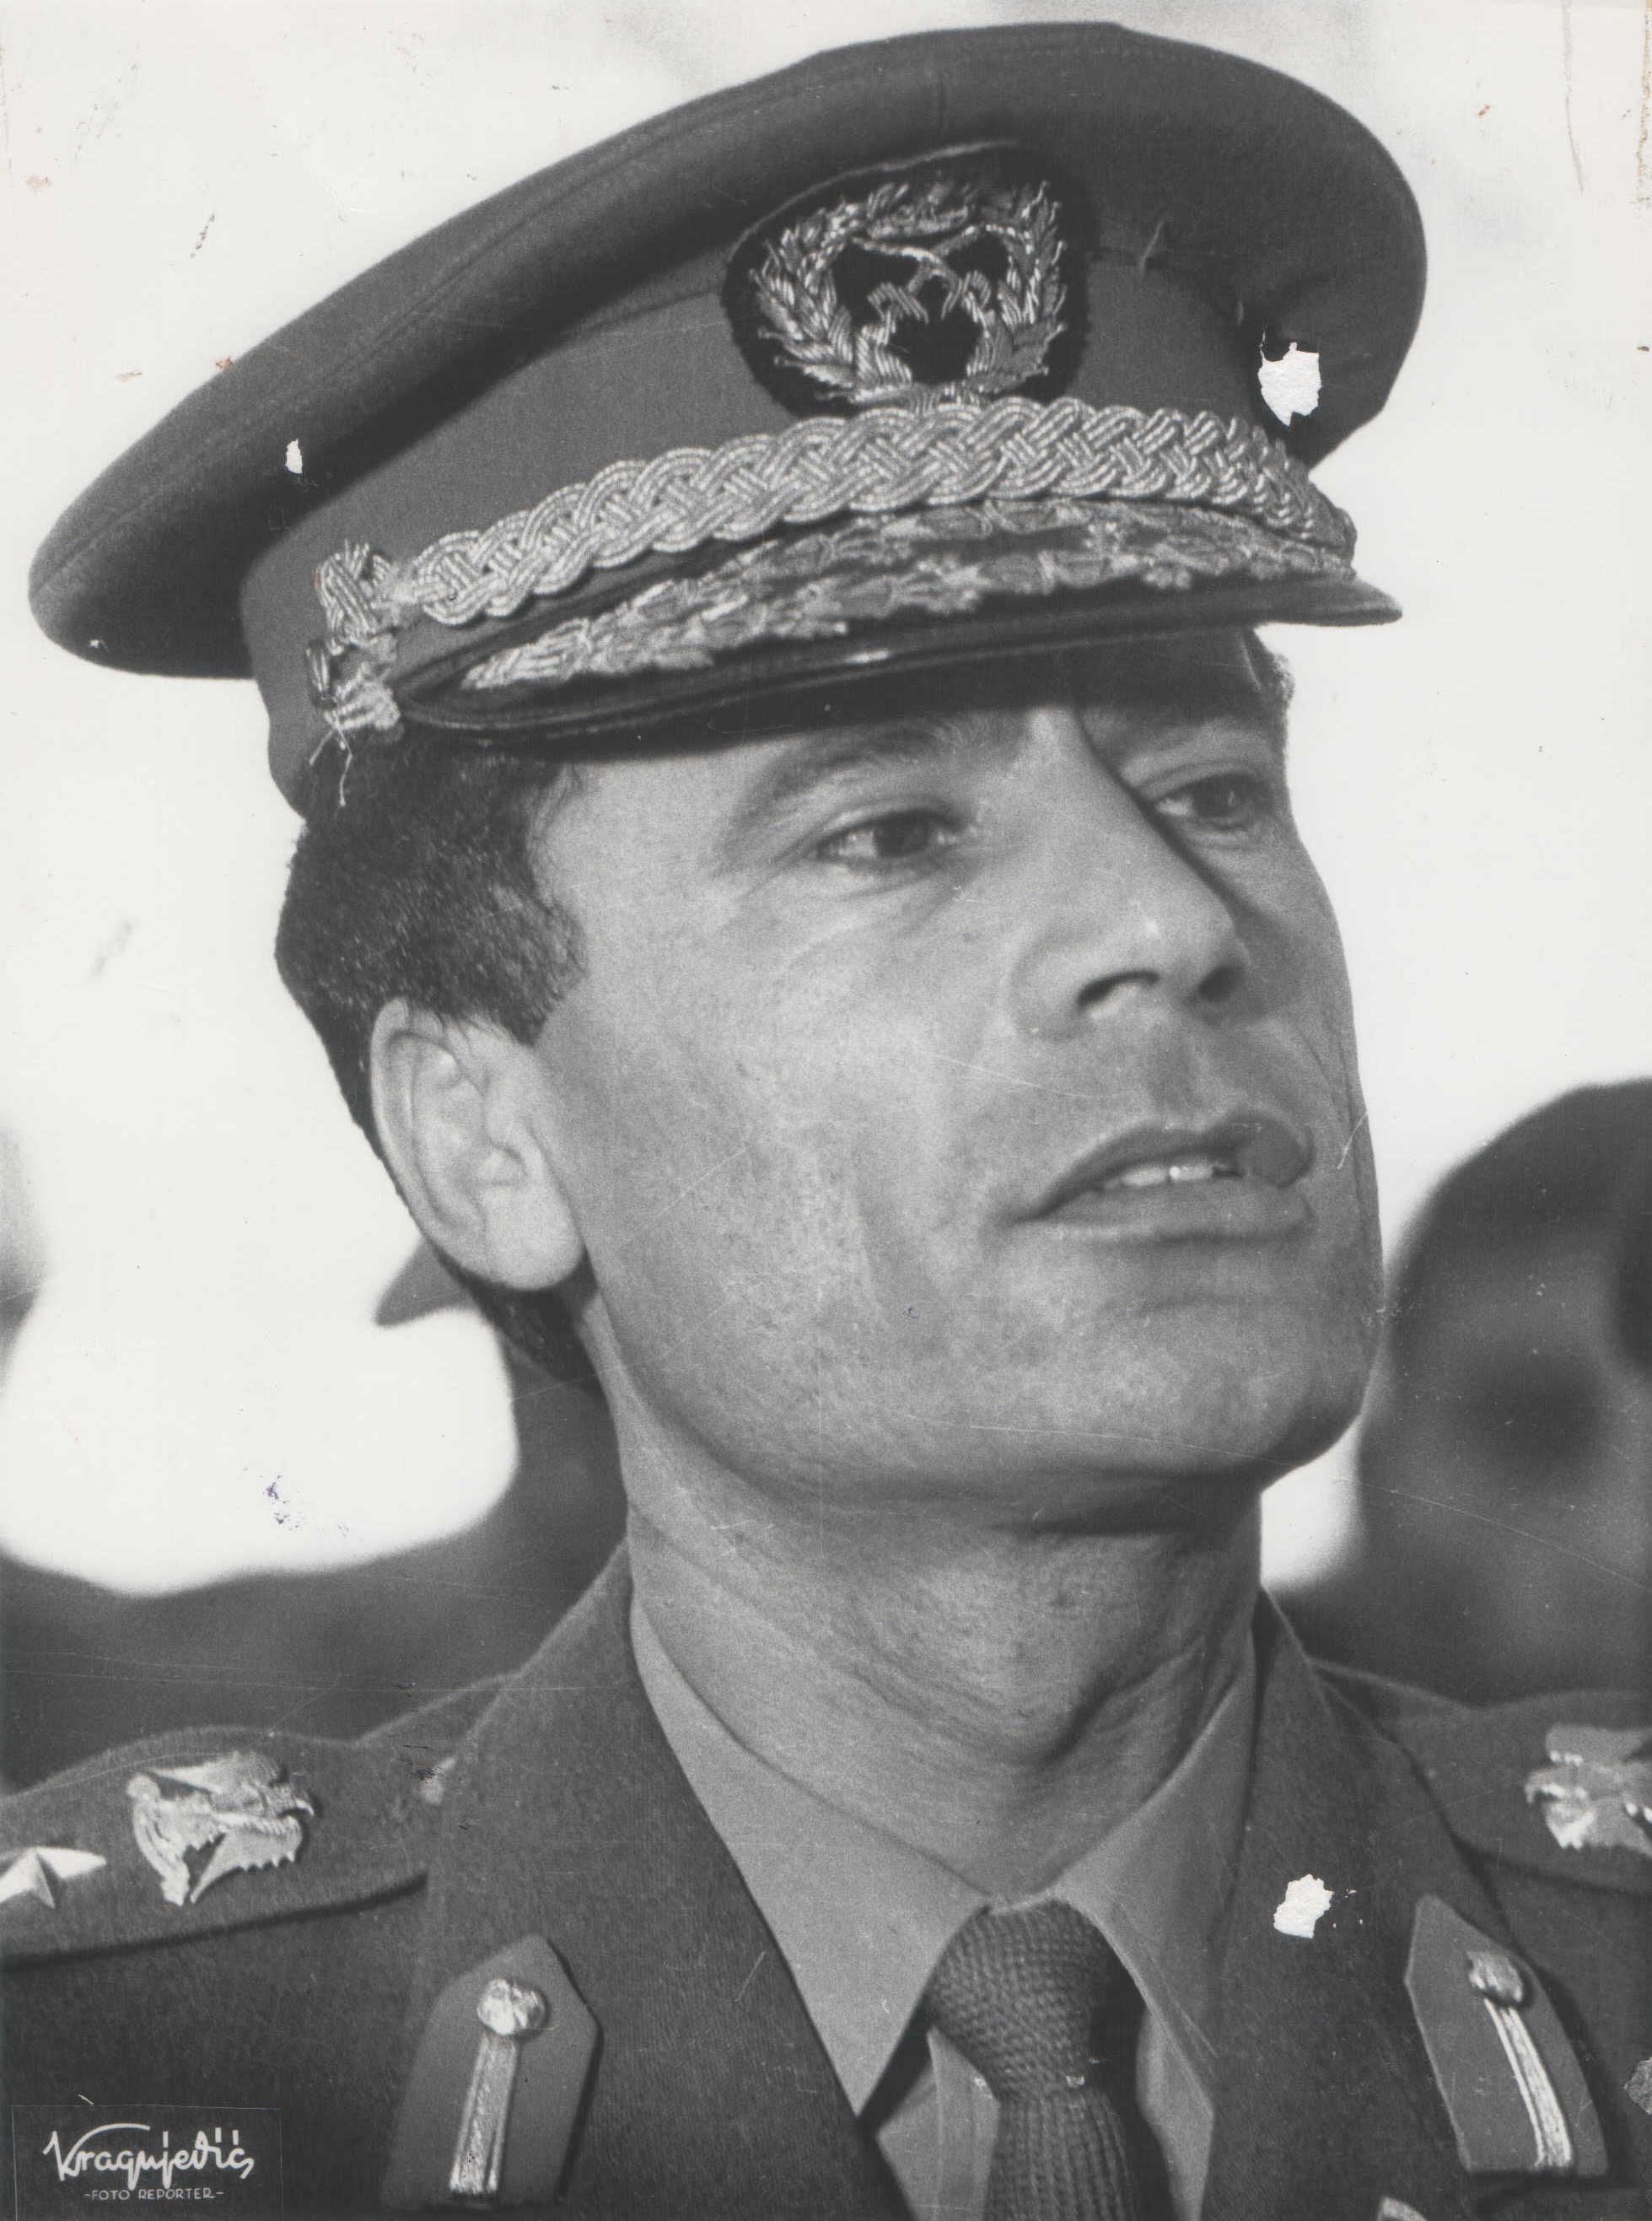 Un joven Gadafi. Alcanzó el poder libio en 1969 tras destronar al Rey Idris I